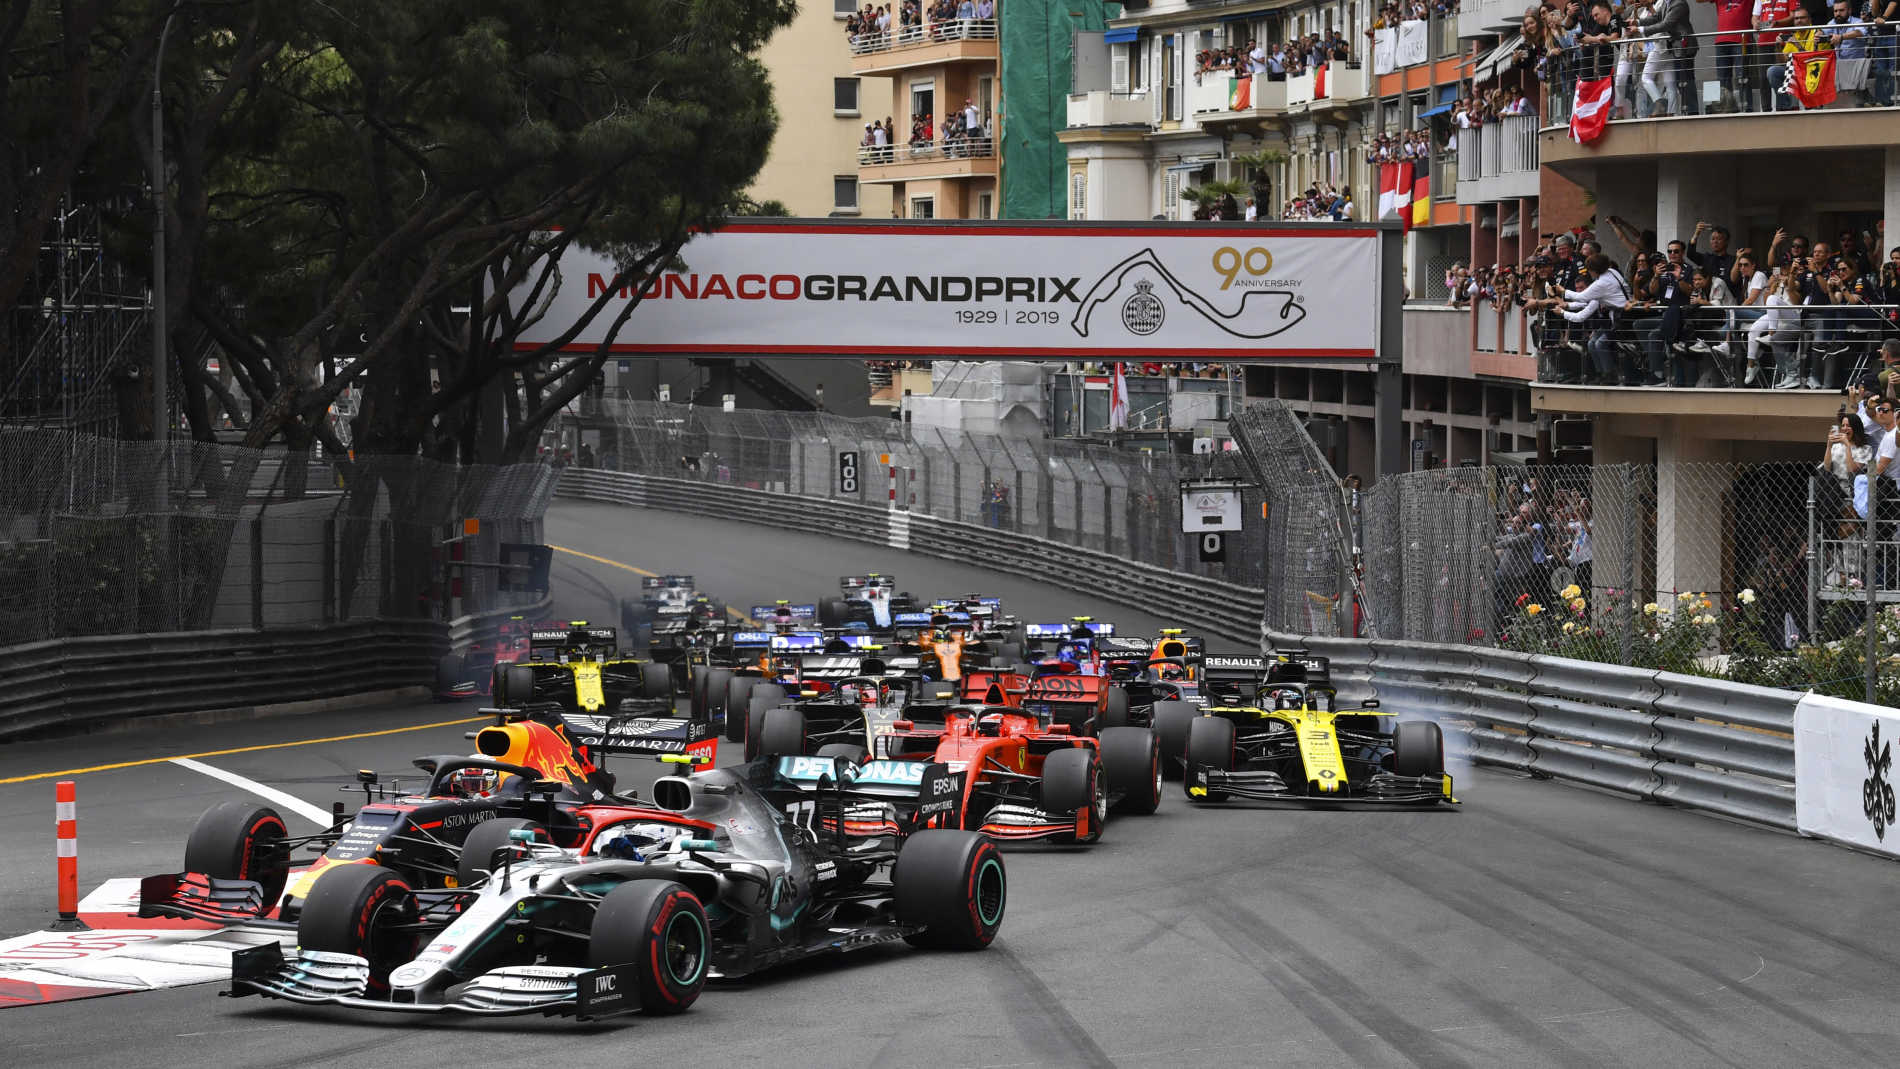 Monaco Grand Prix: Race facts and stats | Formula 1®